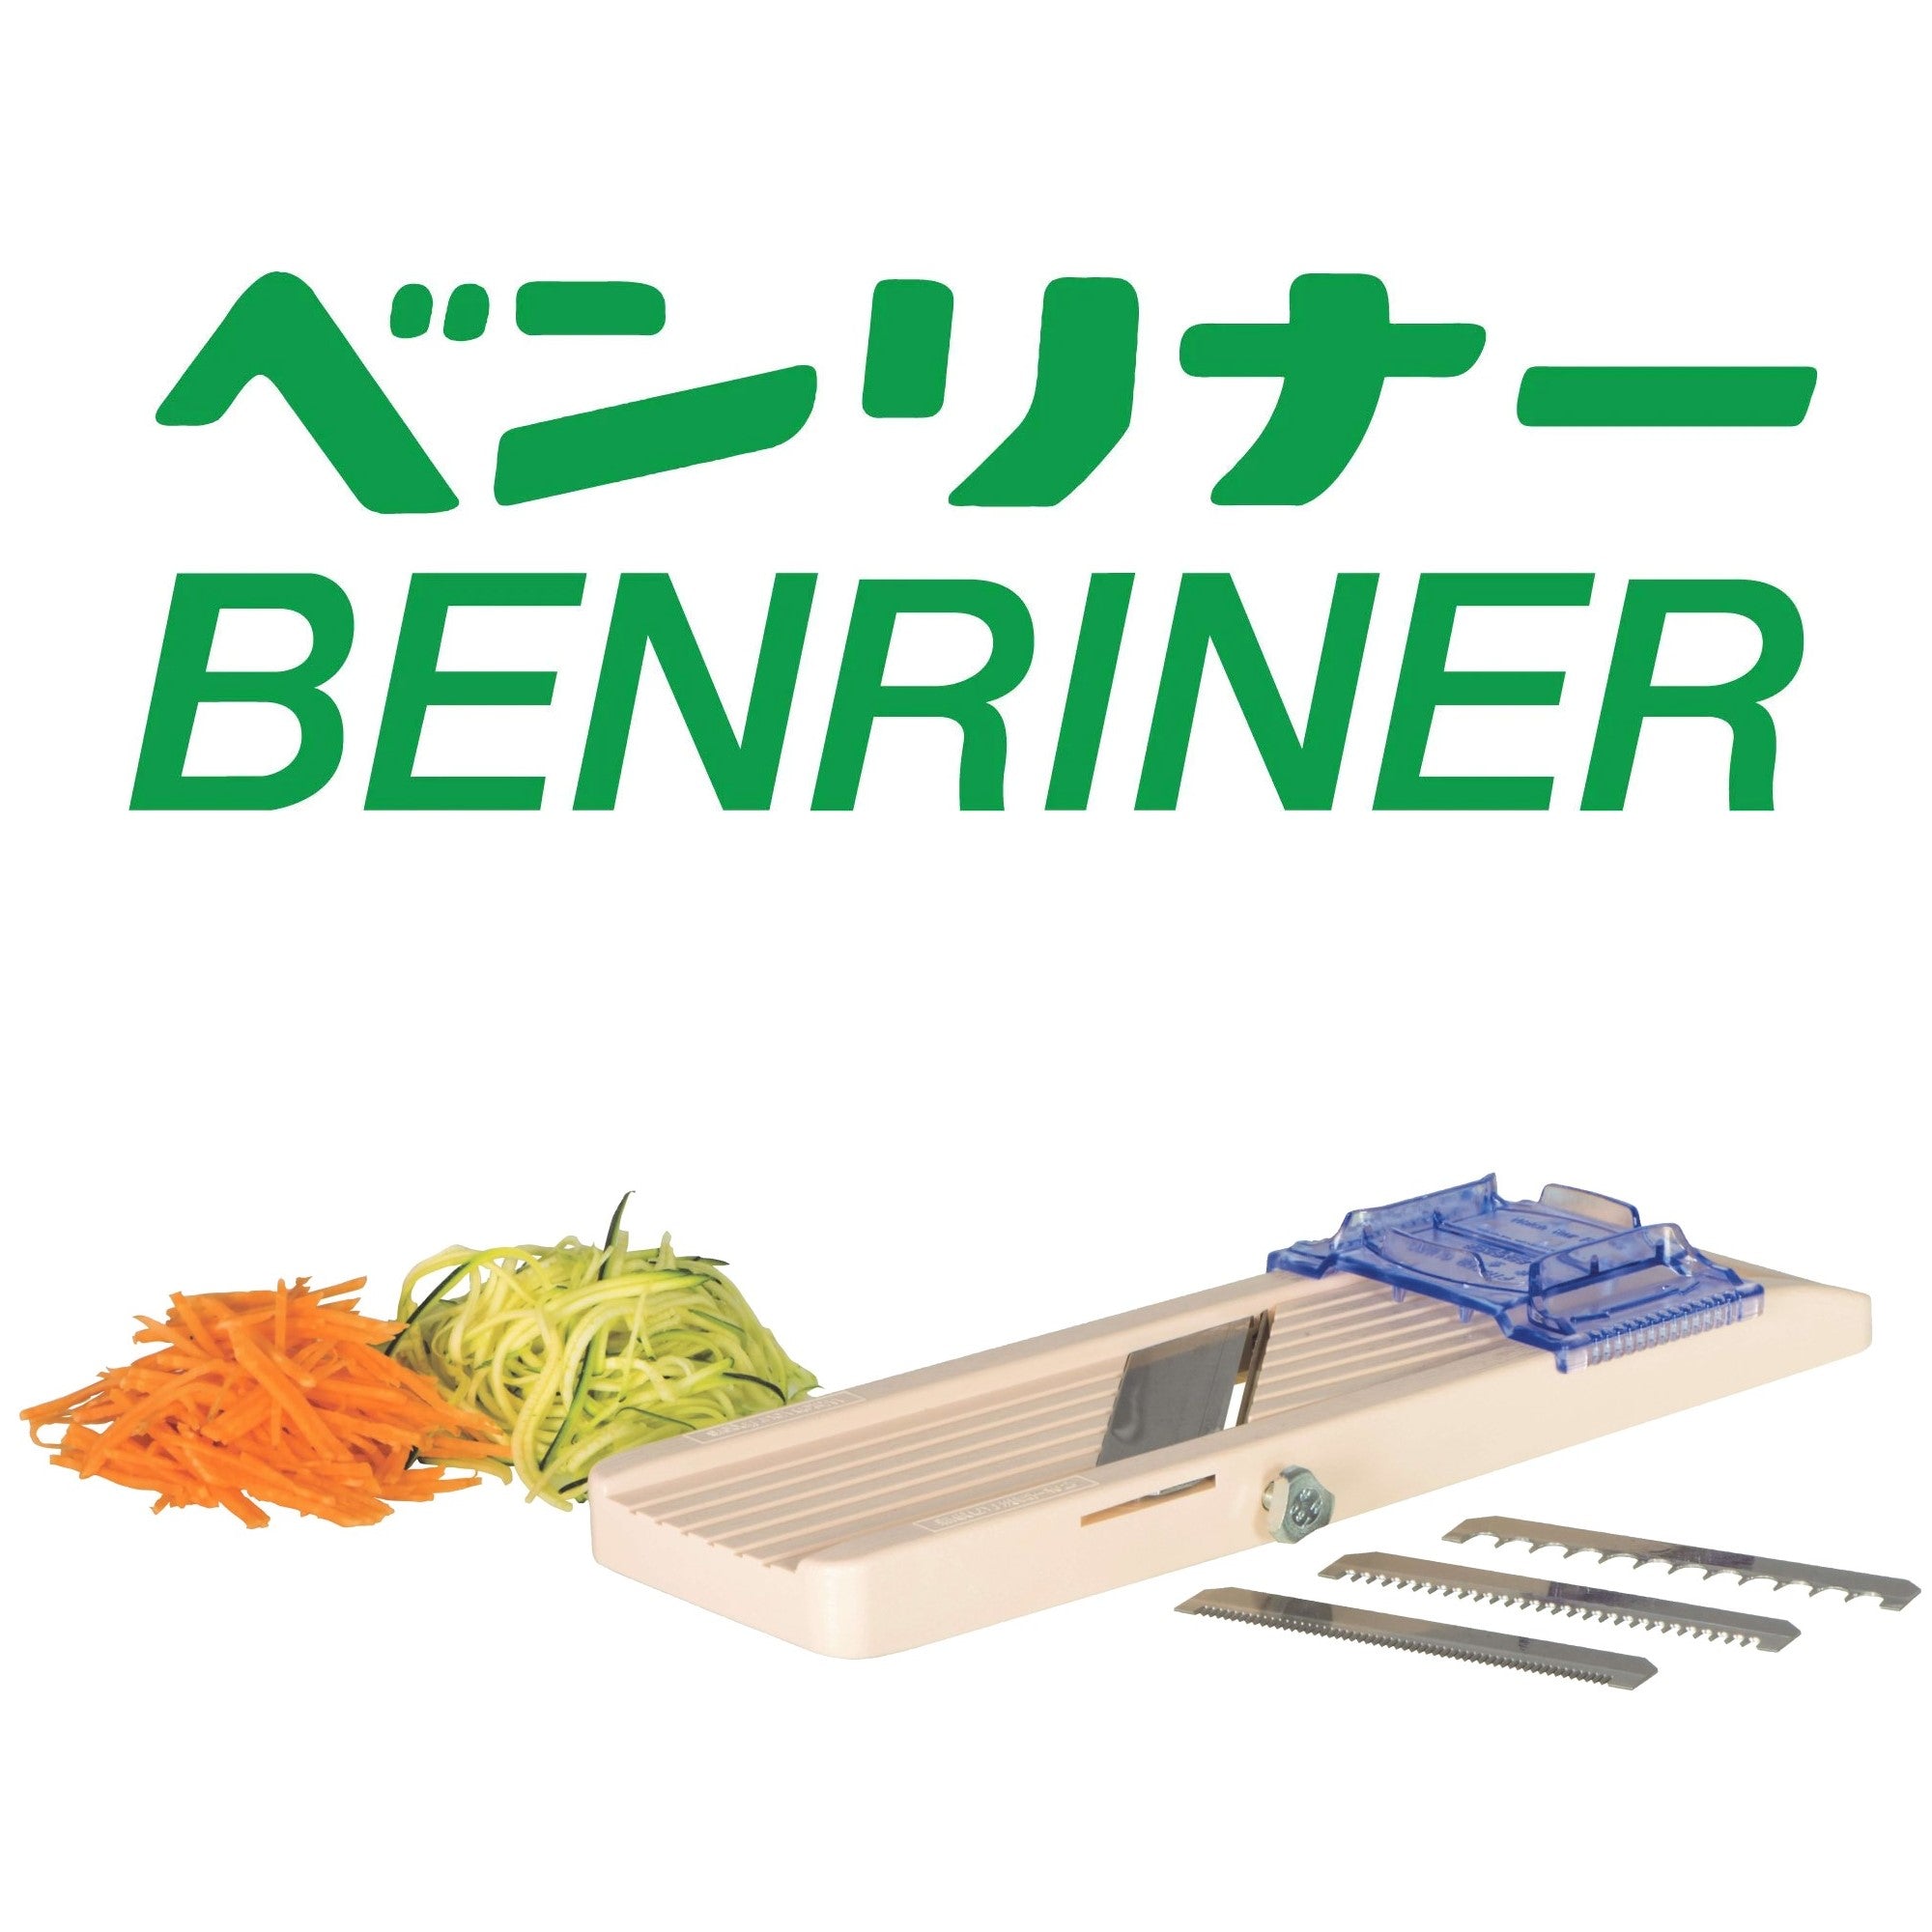 Benriner Pro Mandolin Slicer 64mm